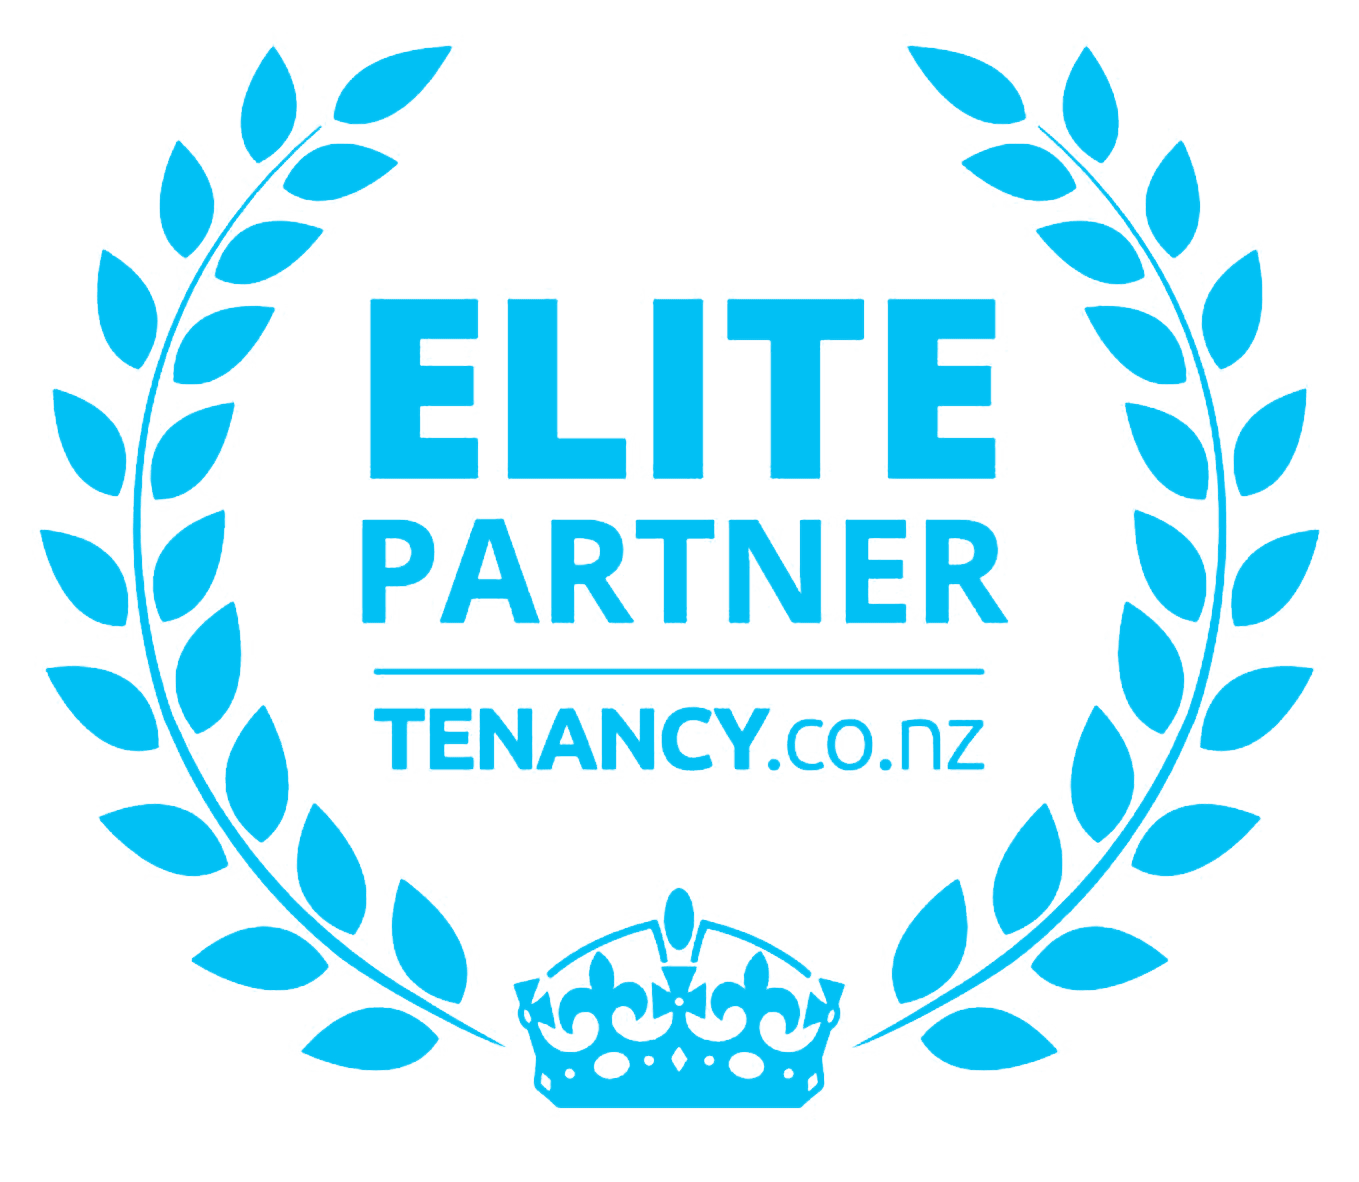 Tenancy Elite Partner